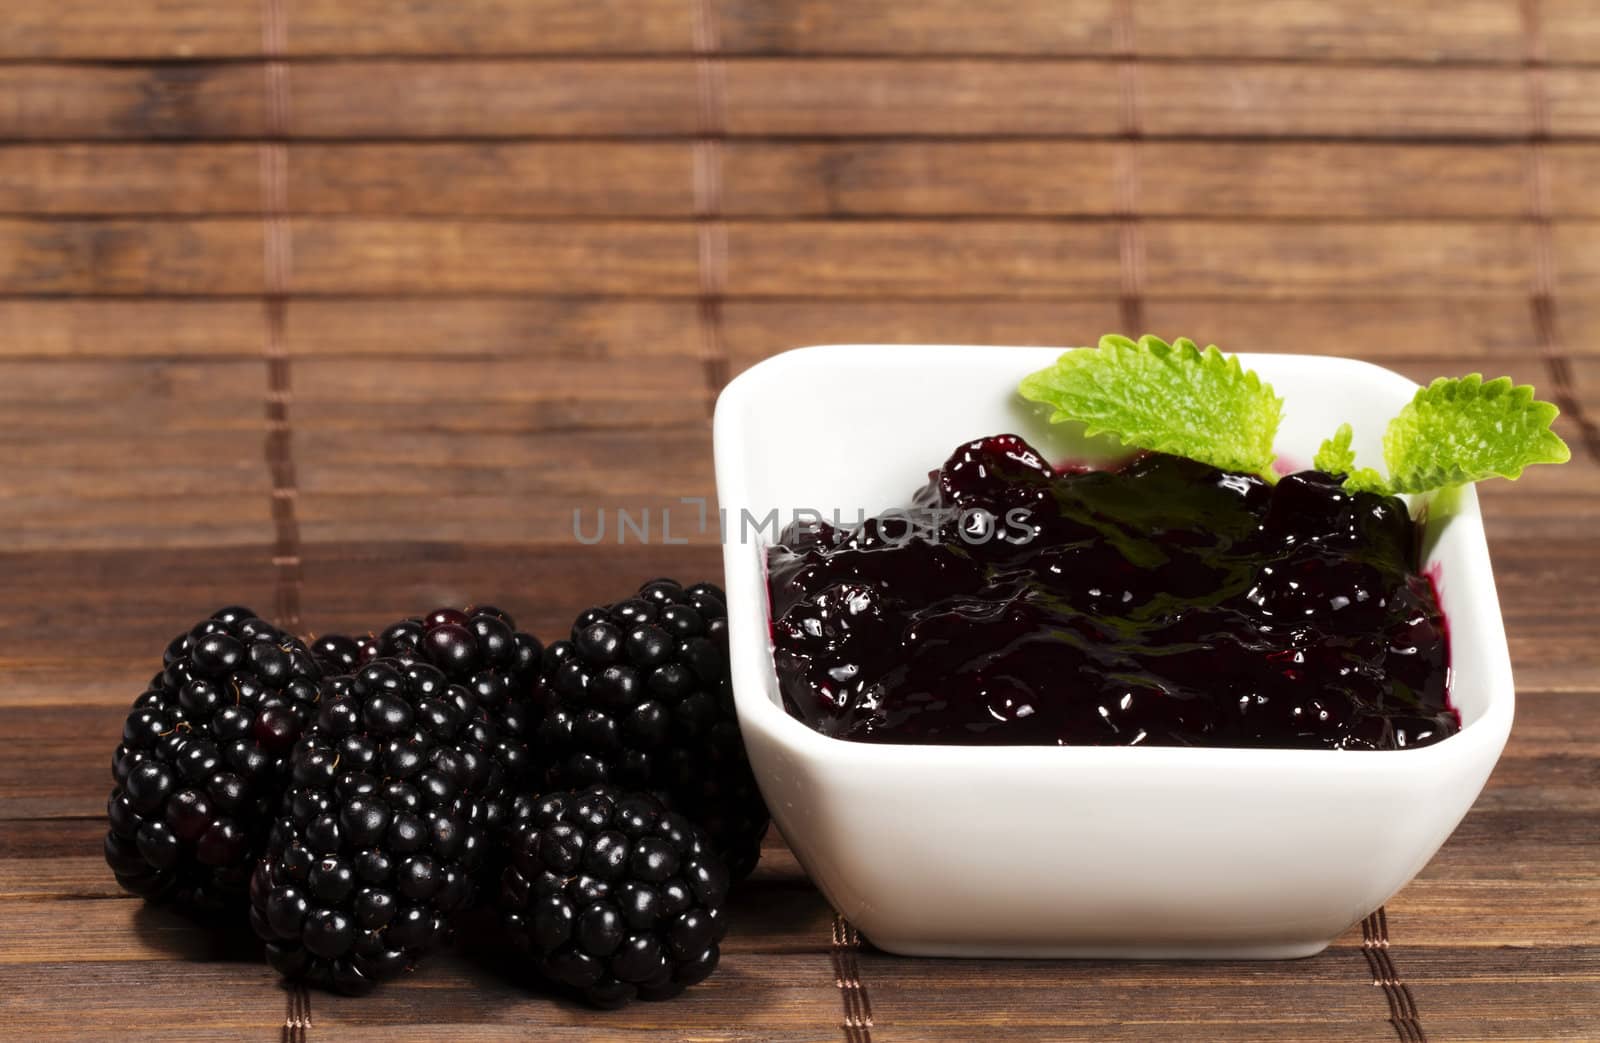 blackberry jam and blackberries on wooden background